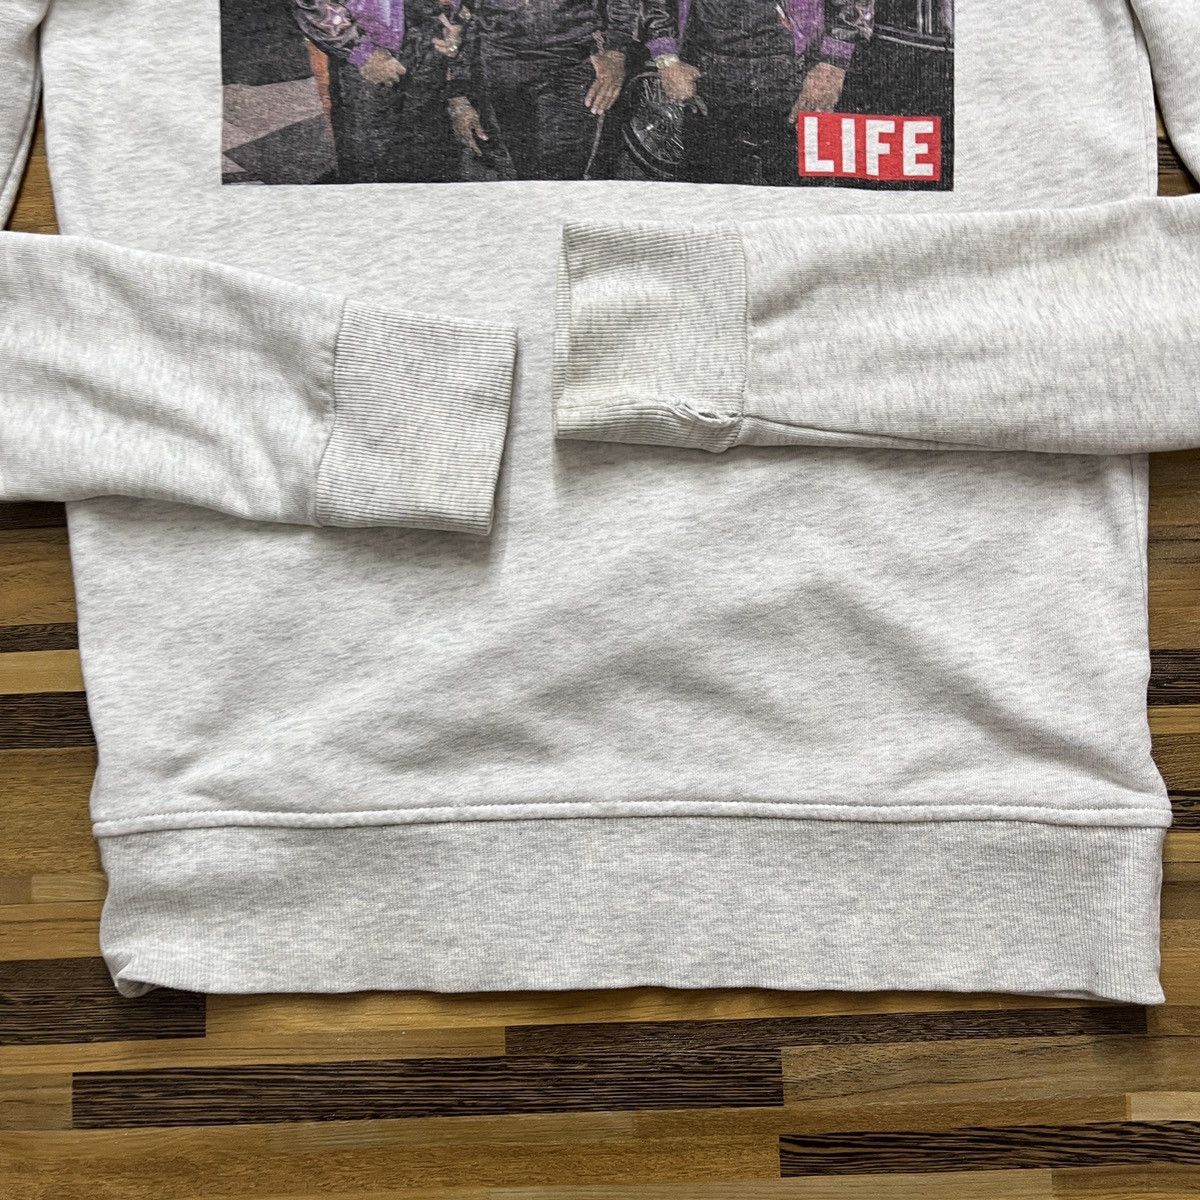 Band Tees - Rare Design RUN DMC Sweatshirts Life - 9